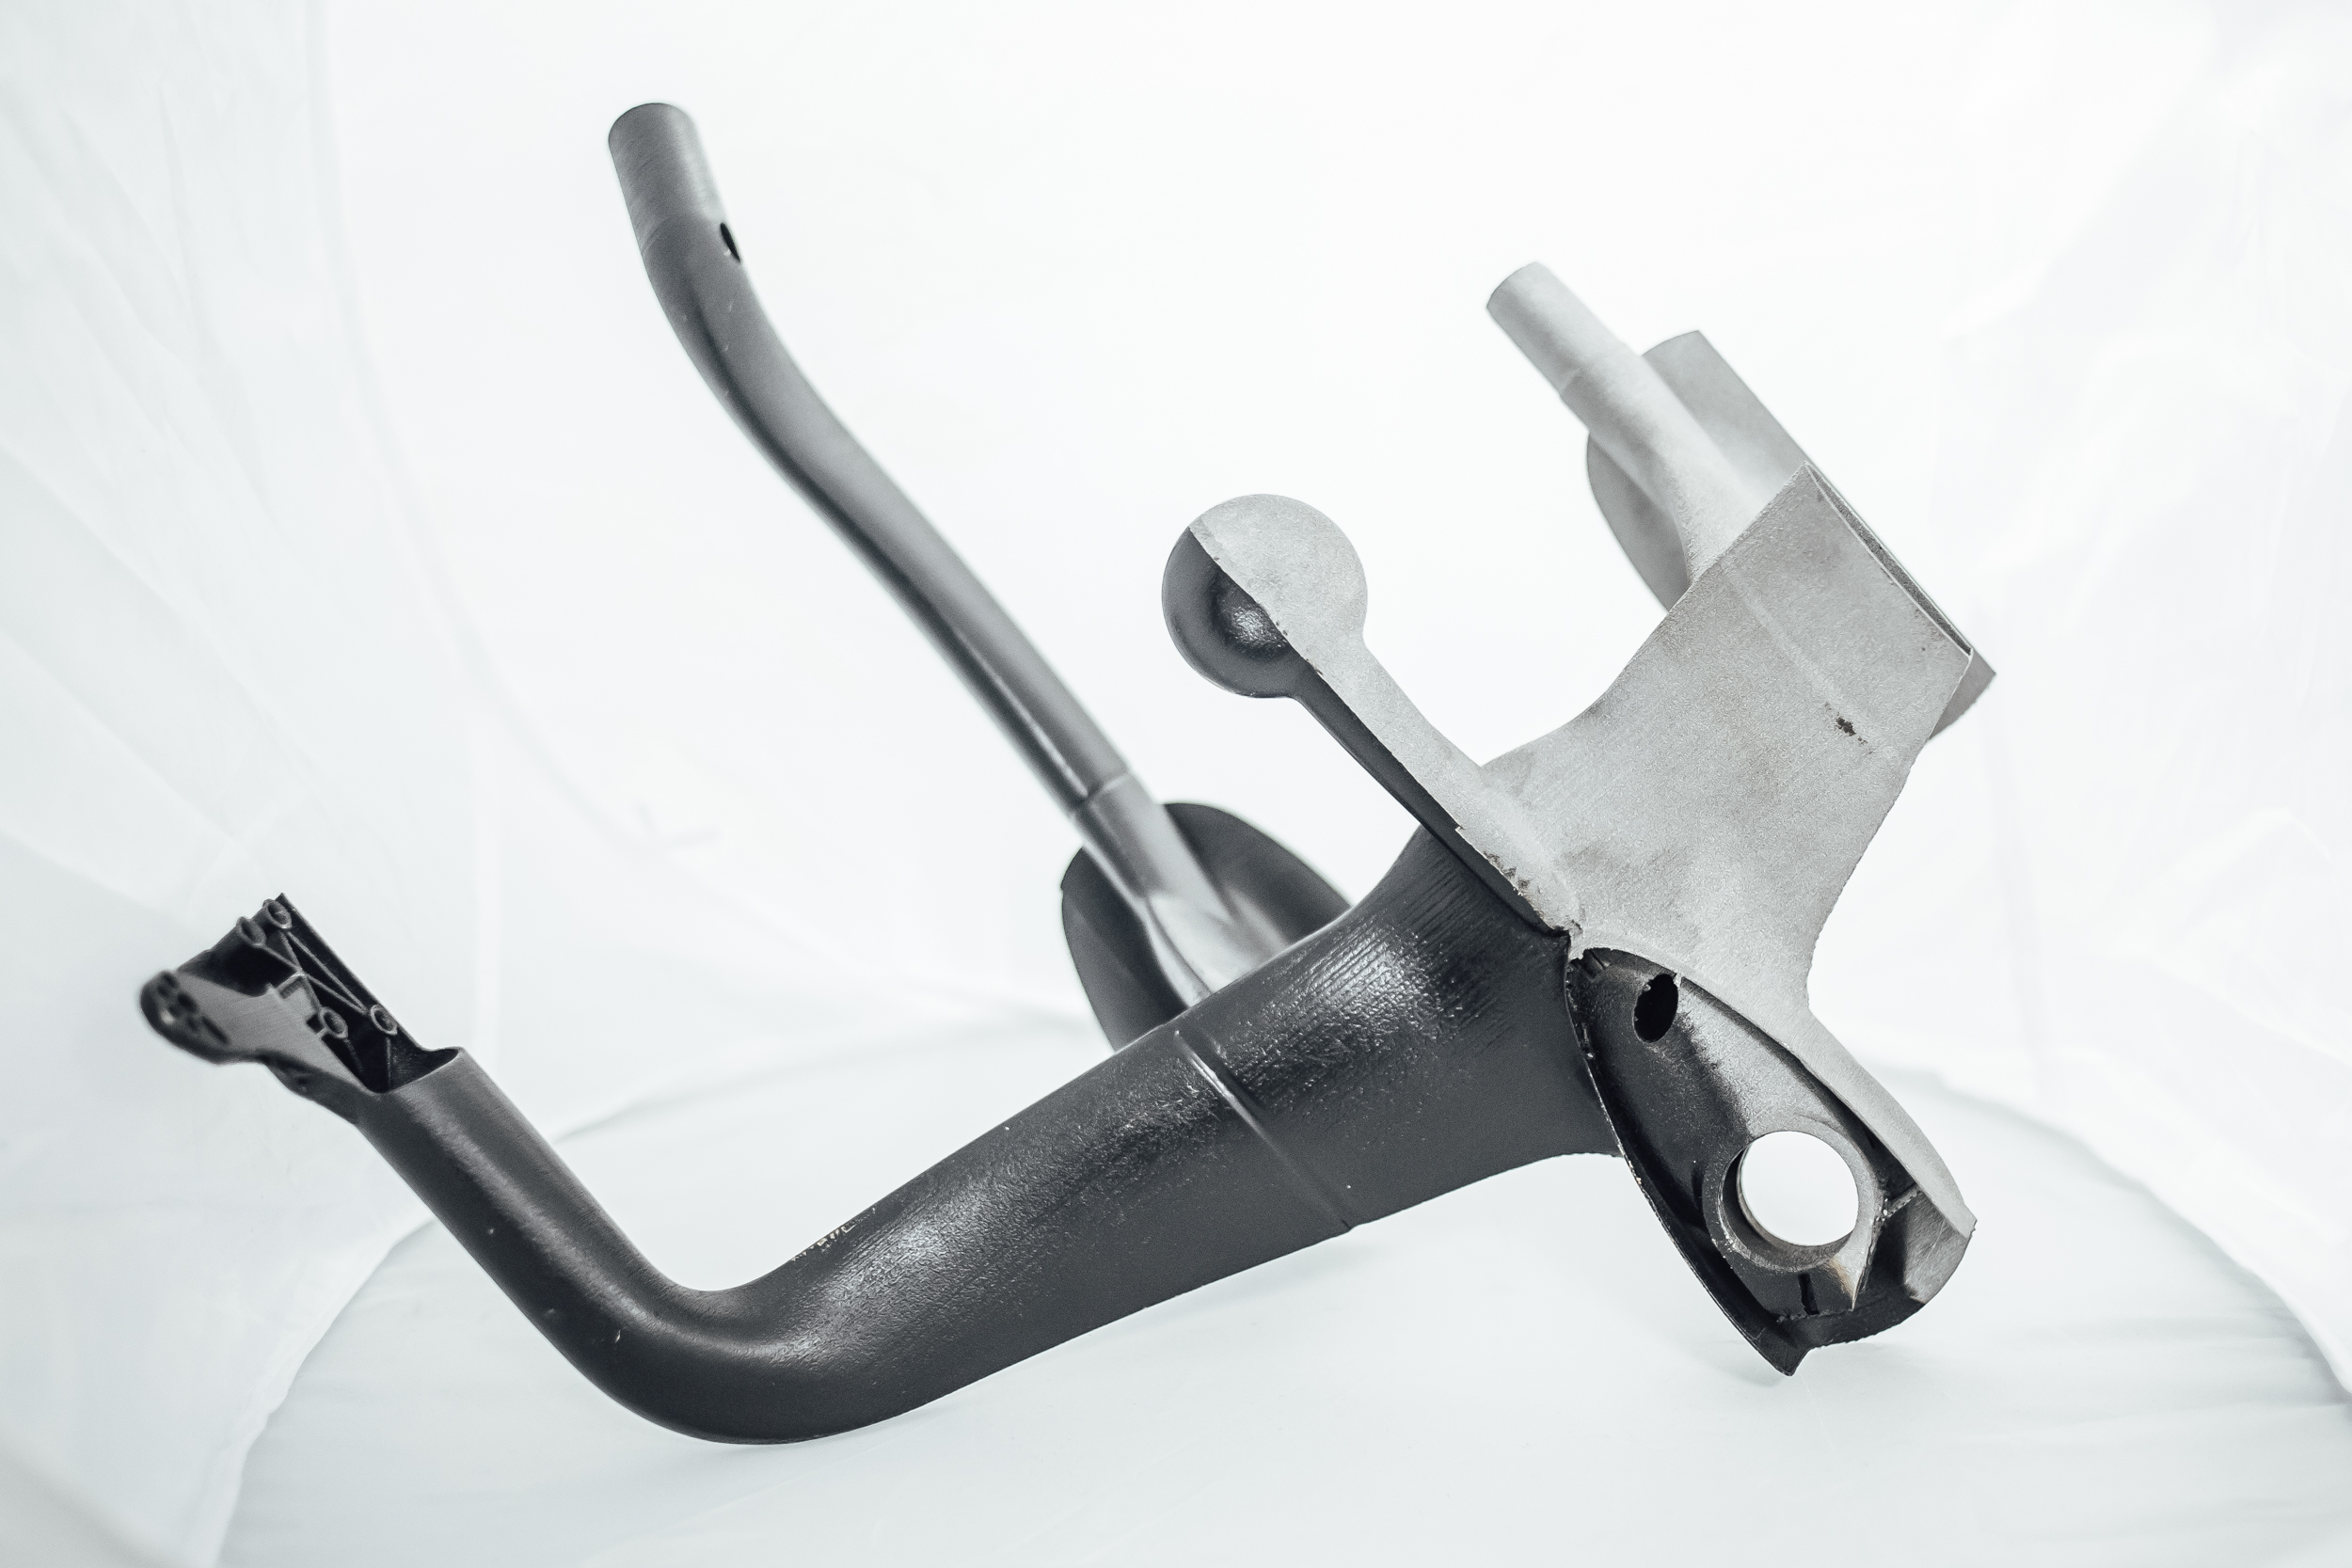 Artifact: Part of super lightweight, aerodynamic stem and handlebars